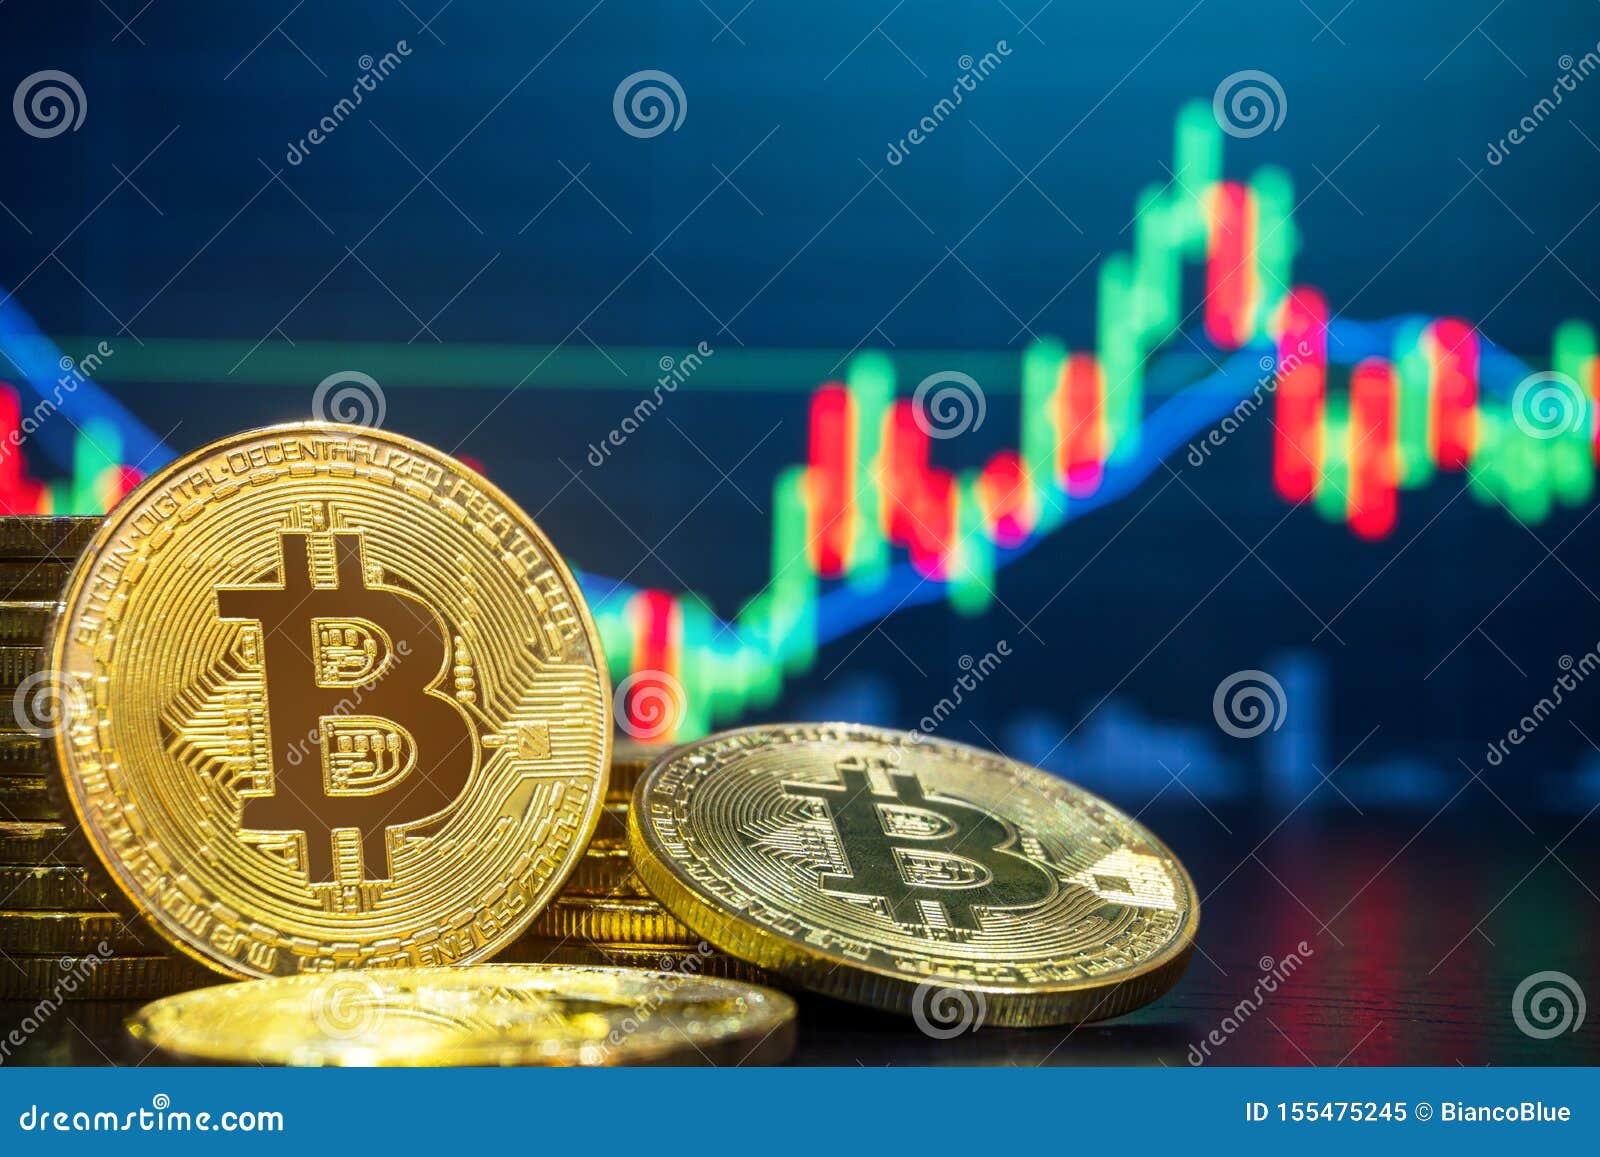 bitcoin trade exchanges